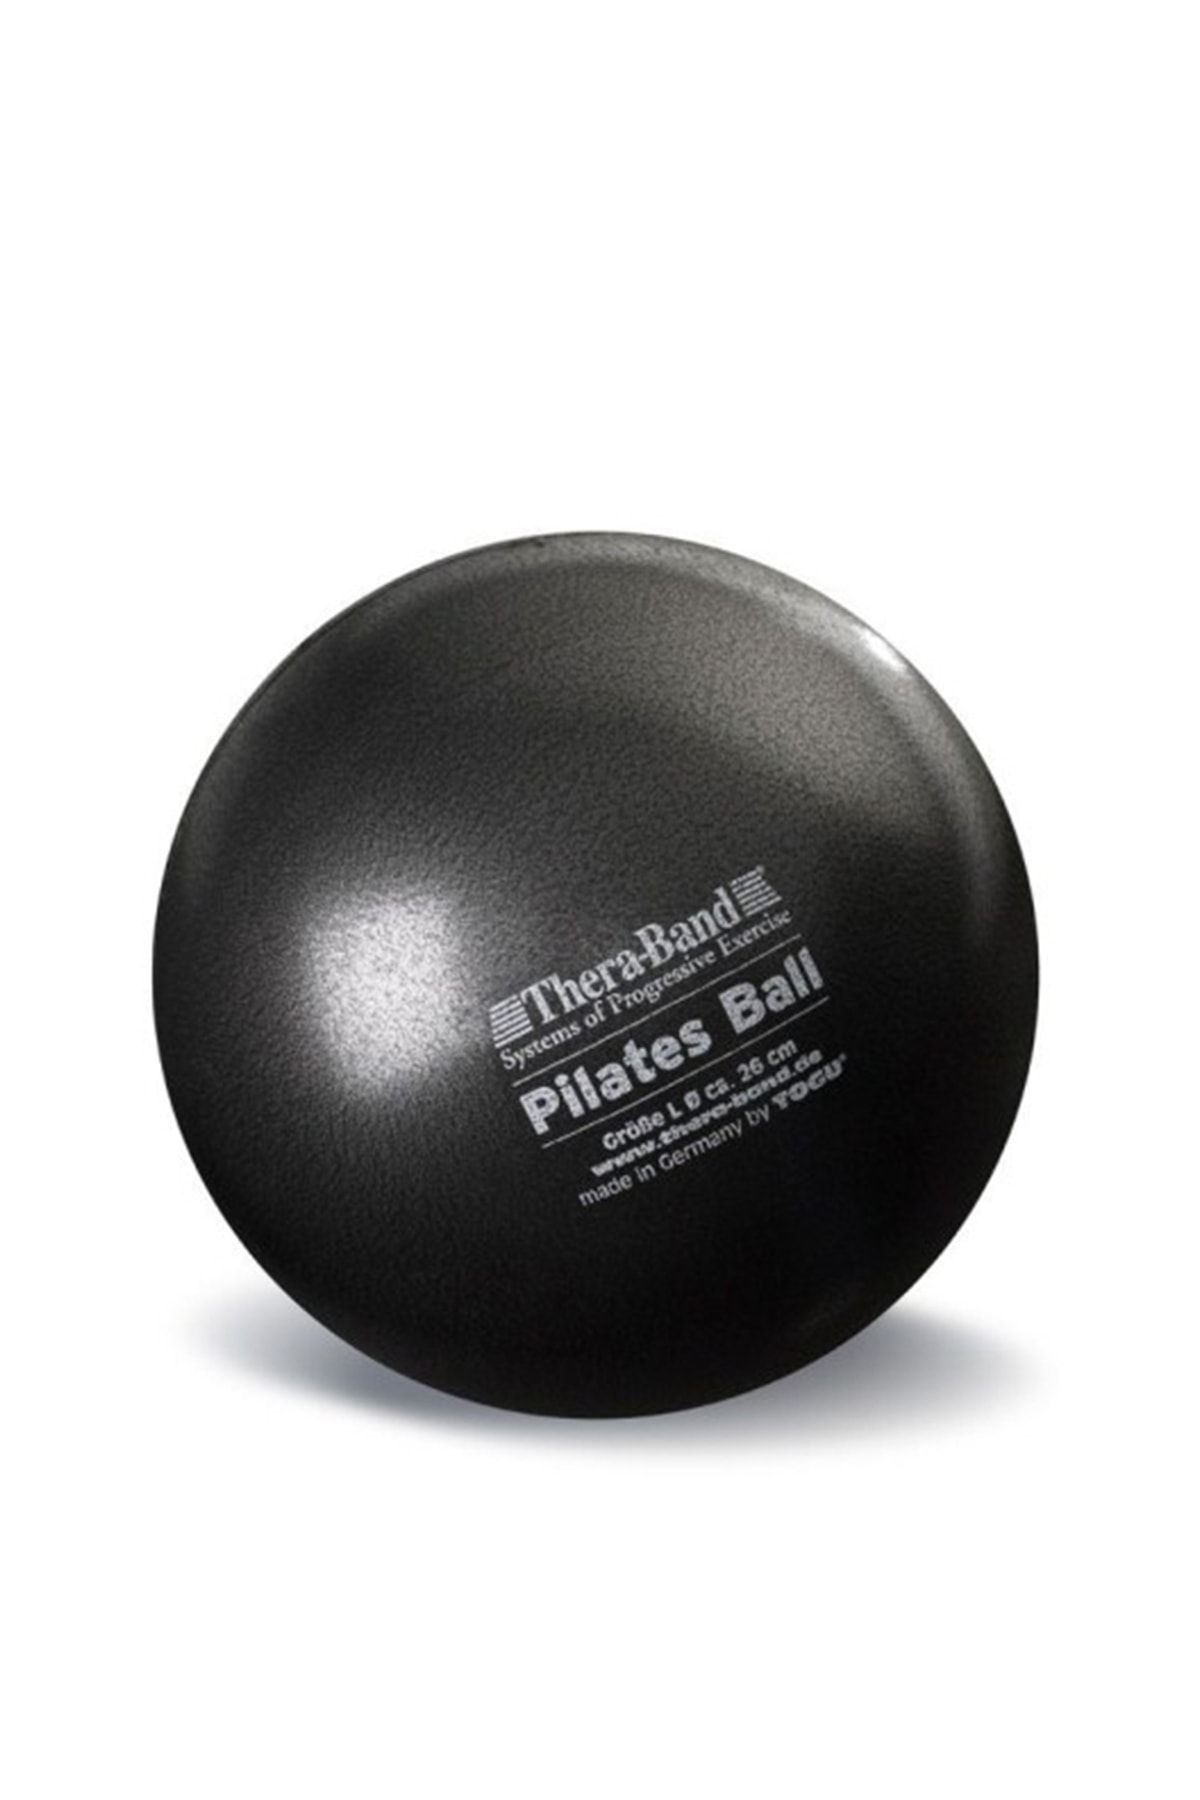 Theraband Pılates Ball, 26cm Sılver